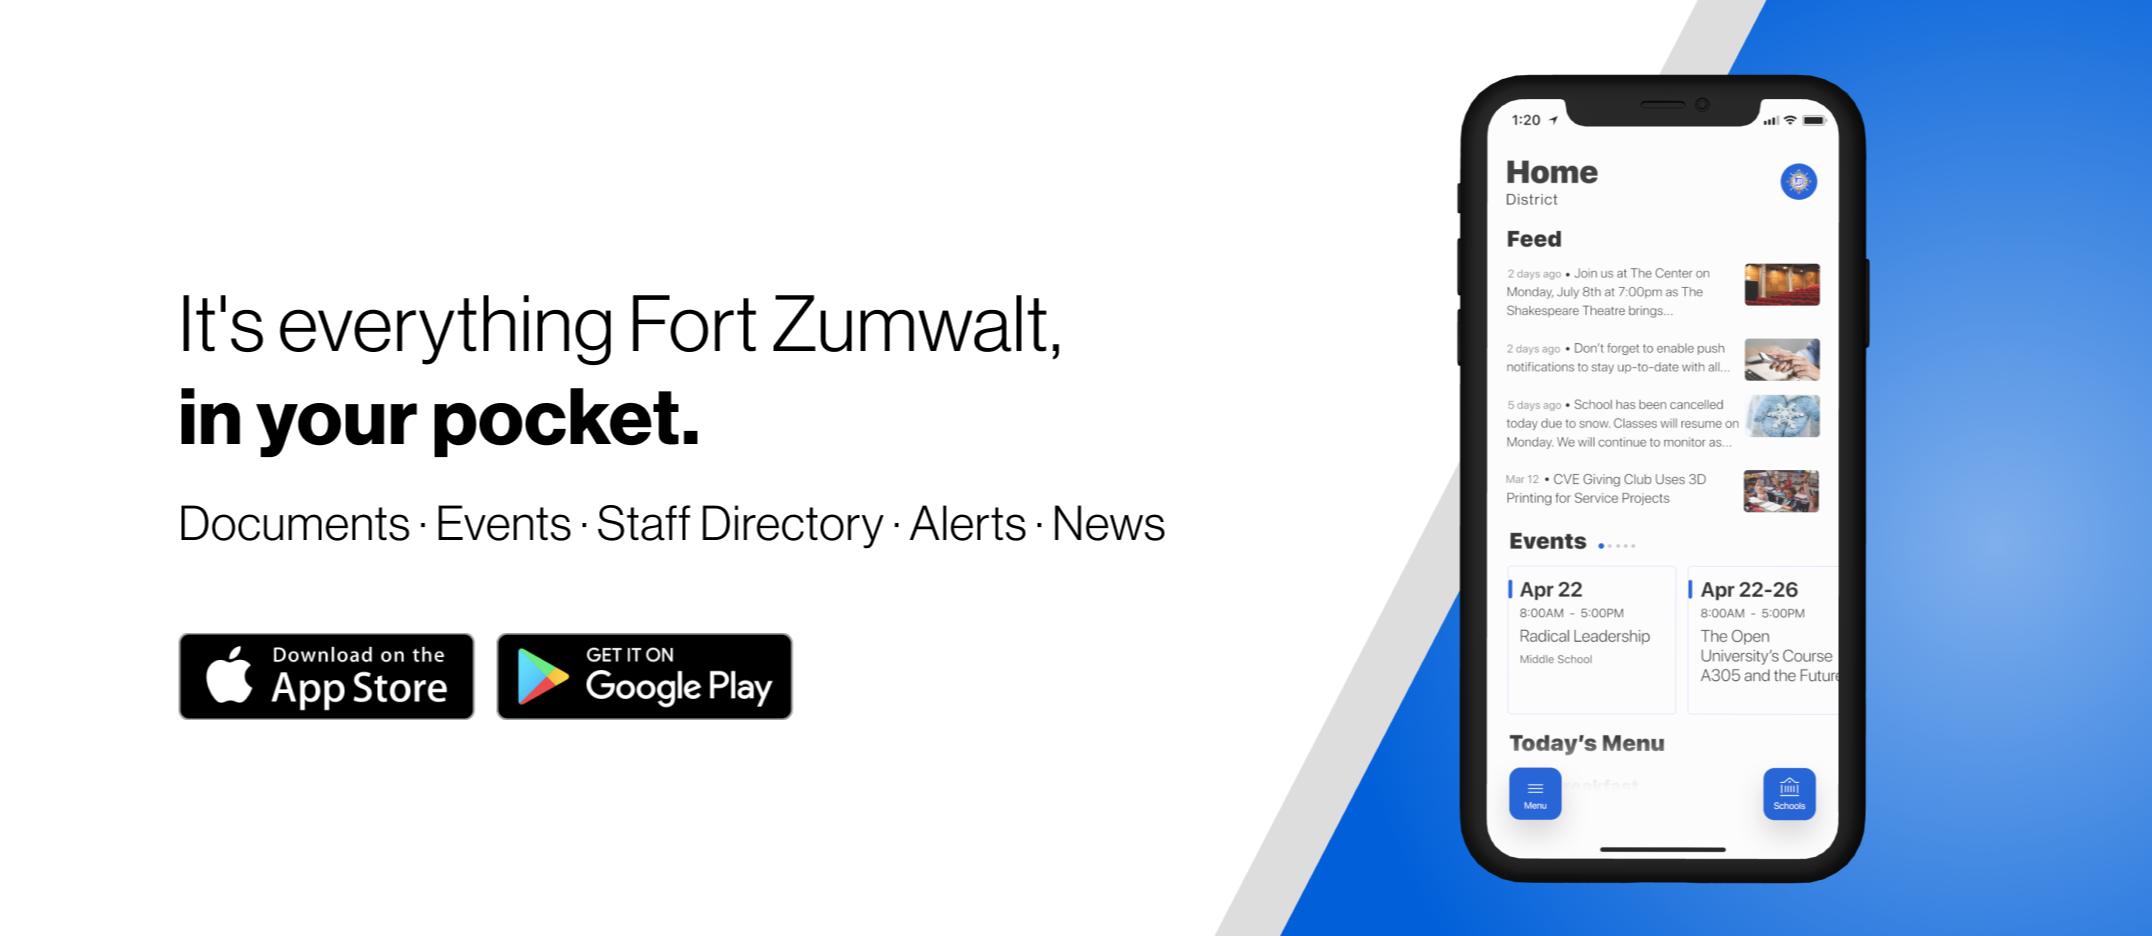 Download the Fort Zumwalt App